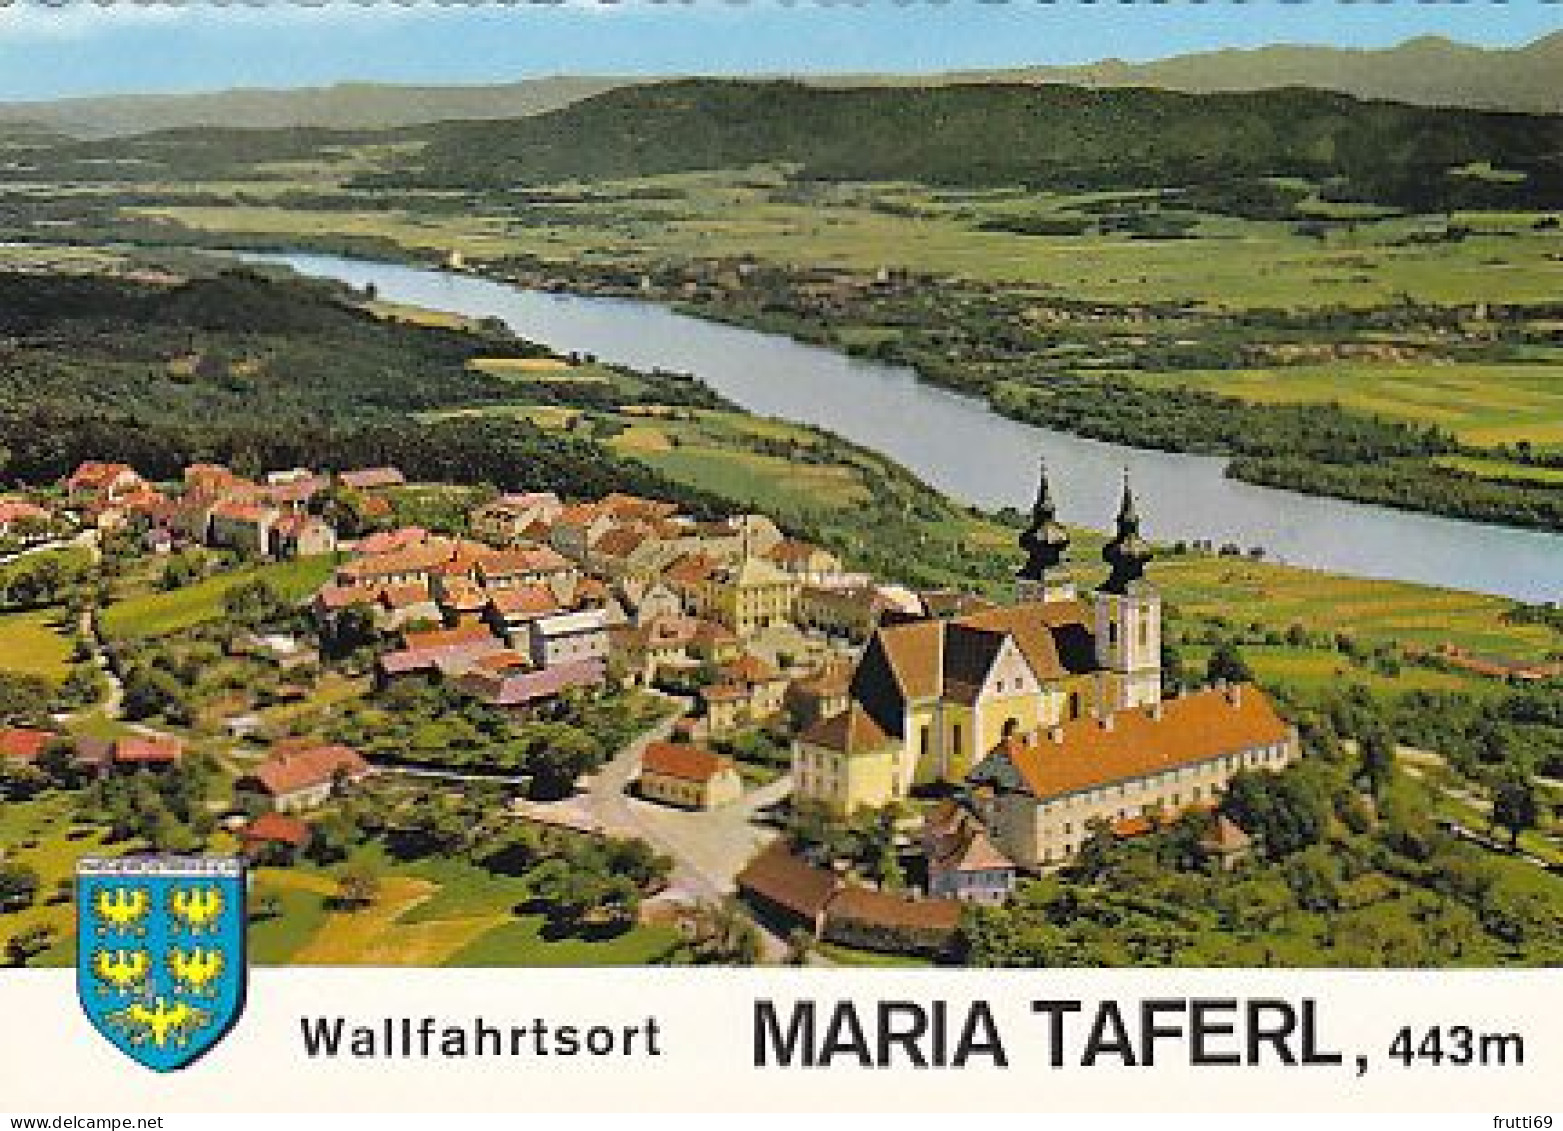 AK 189283 AUSTRIA - Matia Taferl - Maria Taferl